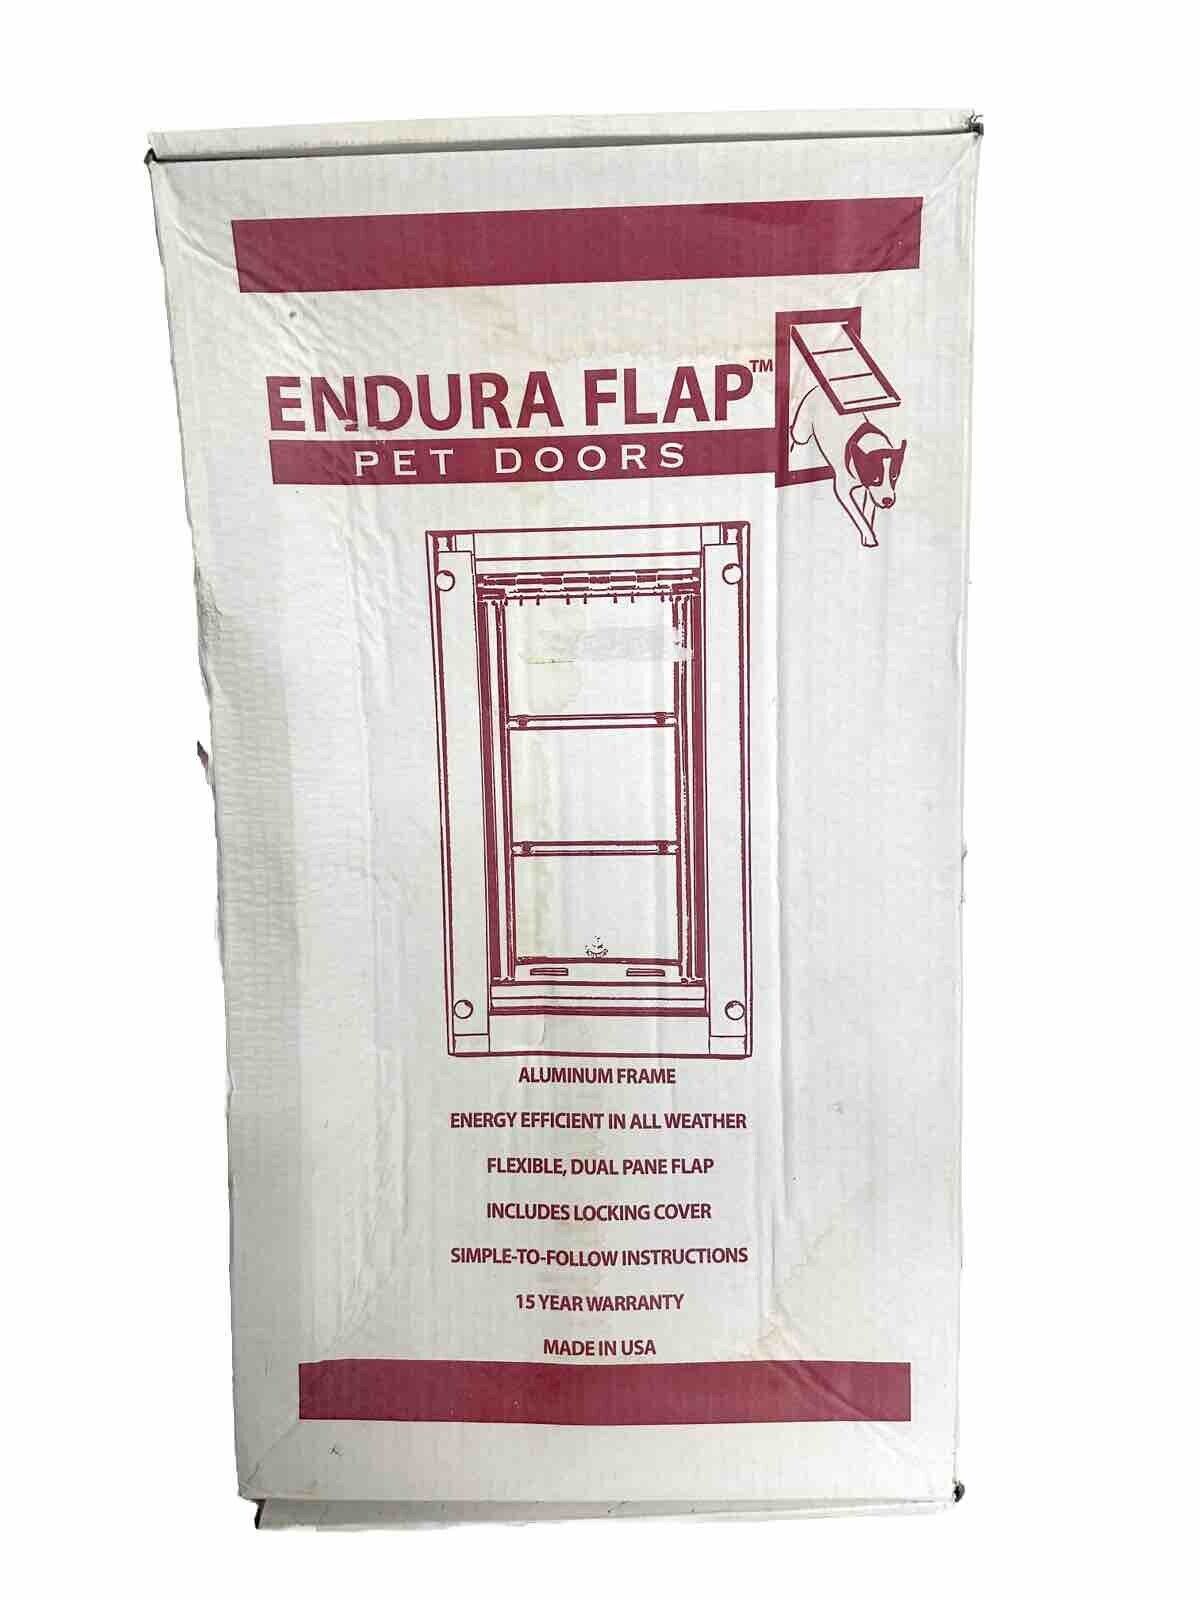 Endura Flap Pet Door for Doors - All-Weather Insulated - Black XL Double Flap